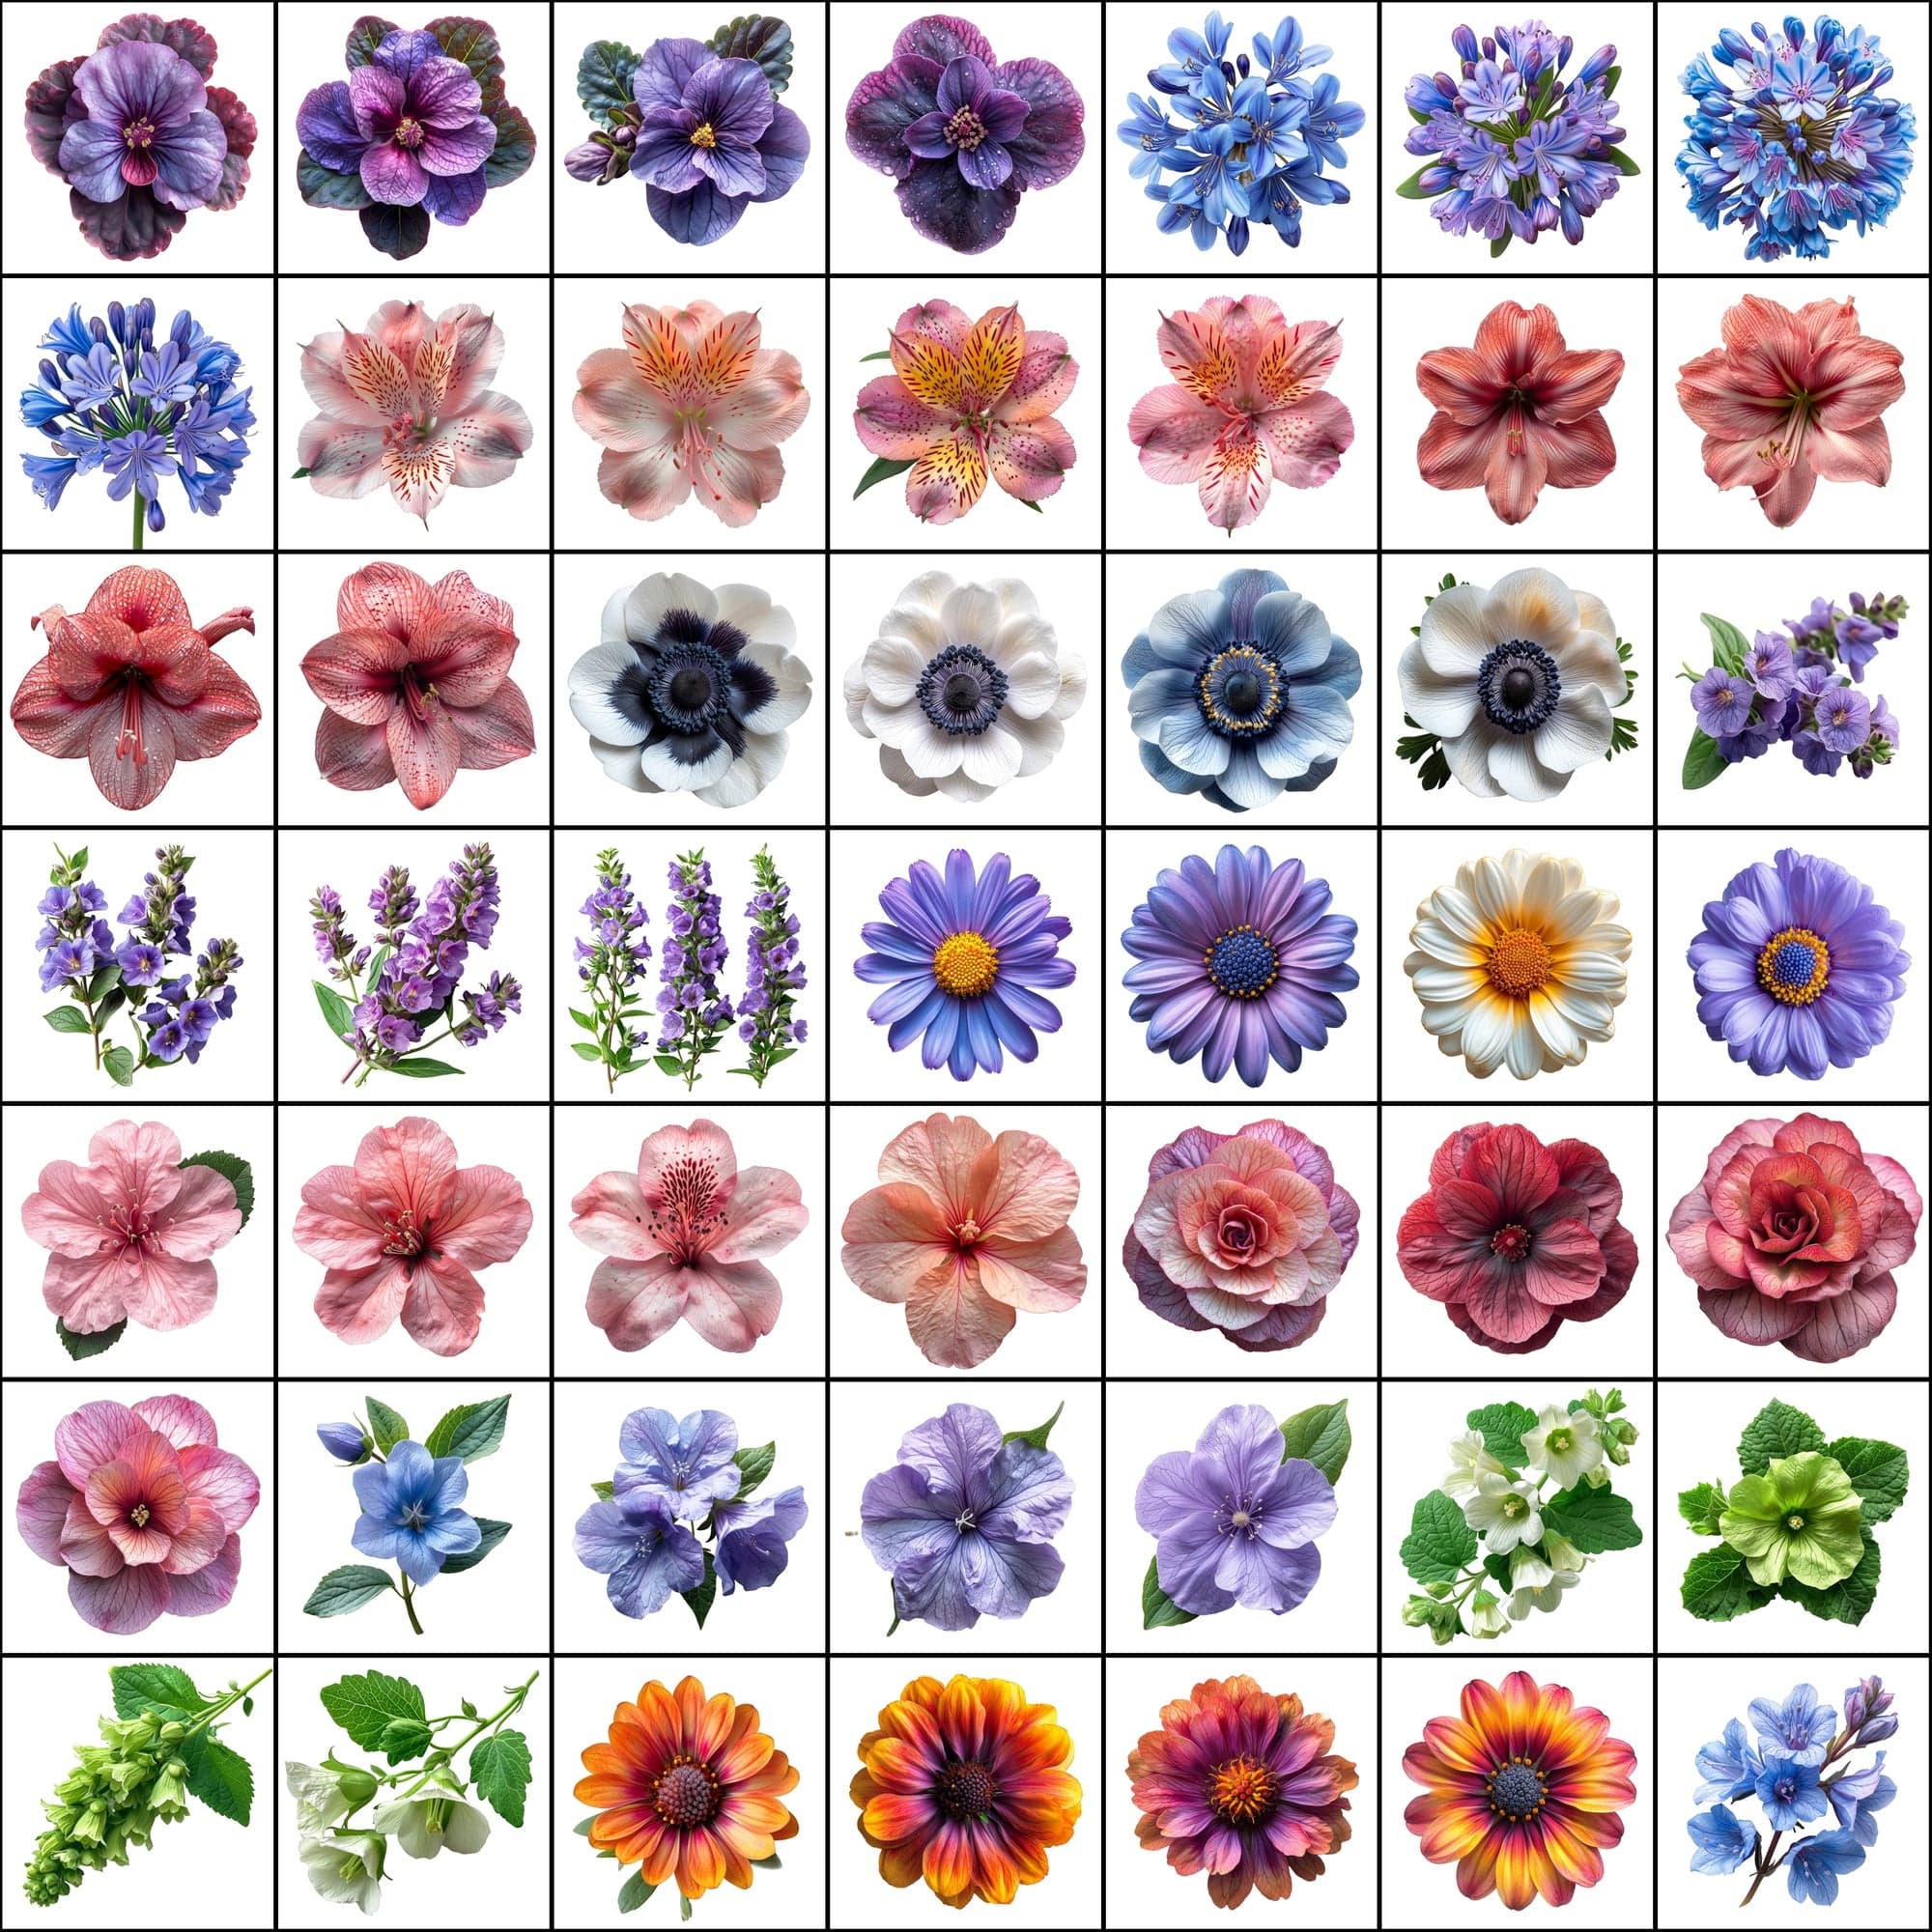 580 Top View Floral Images with Transparent Backgrounds Digital Download Sumobundle